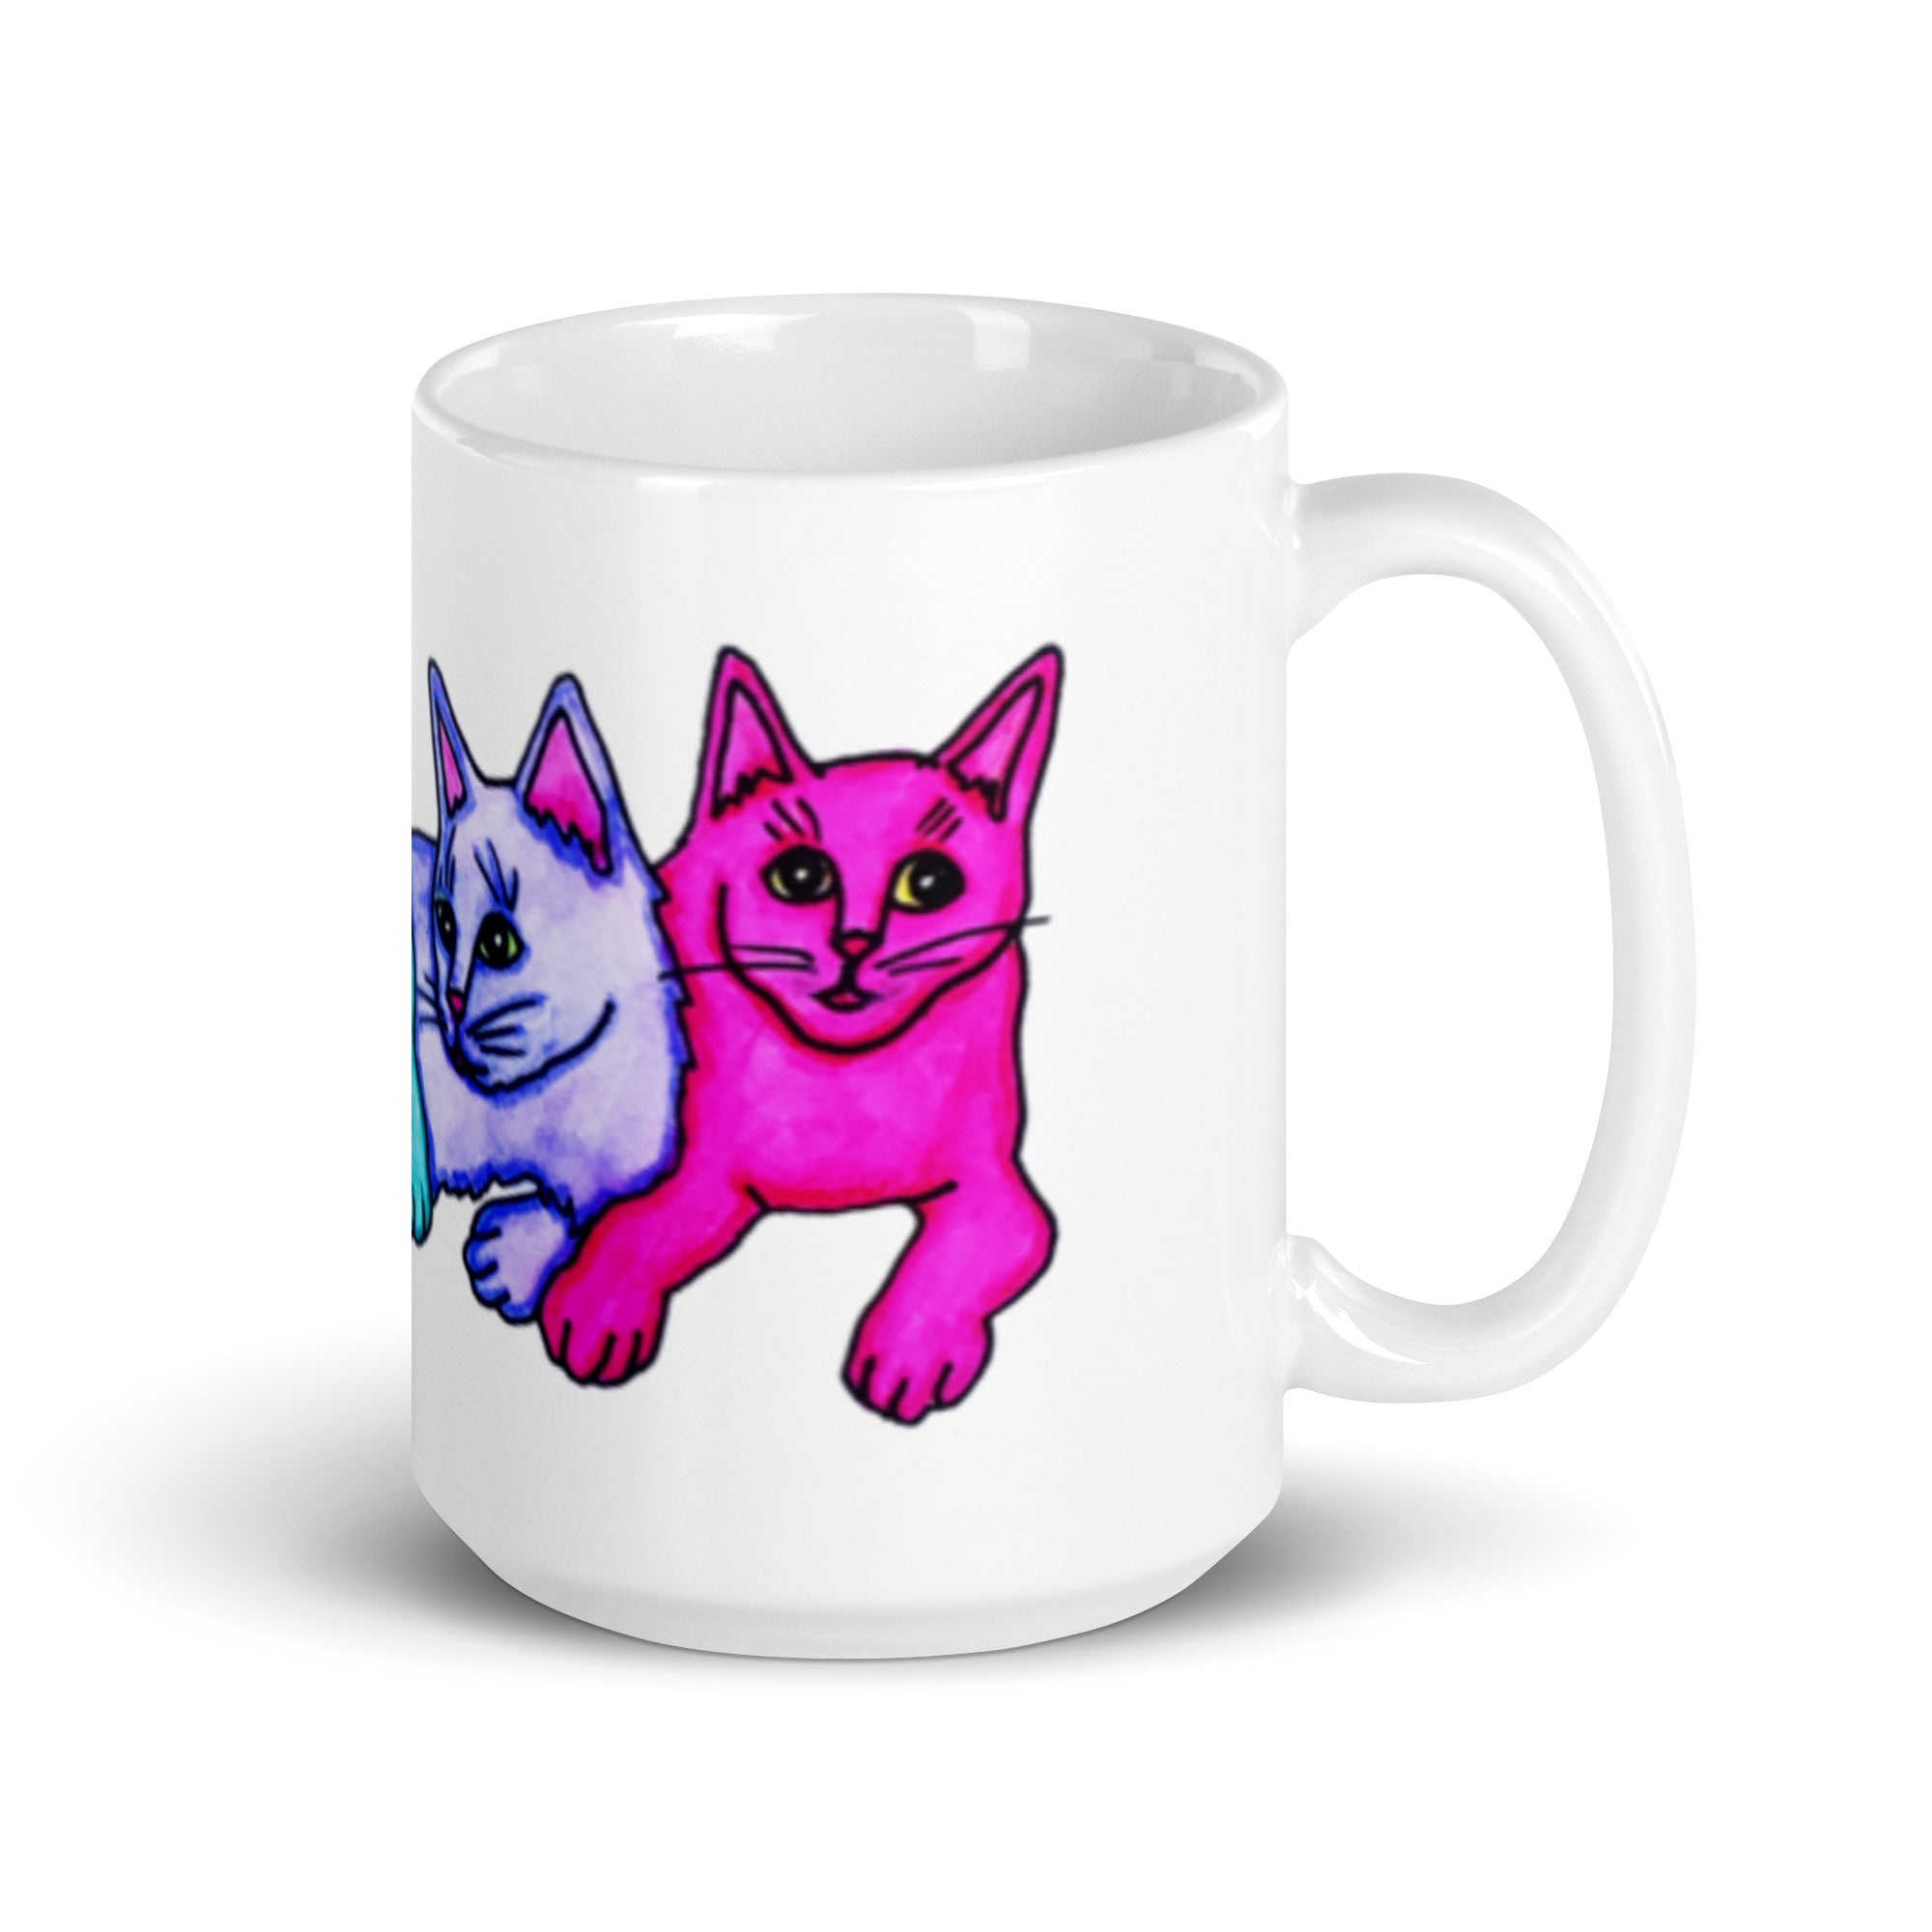 Three Color Cats White glossy mug - Art Love Decor